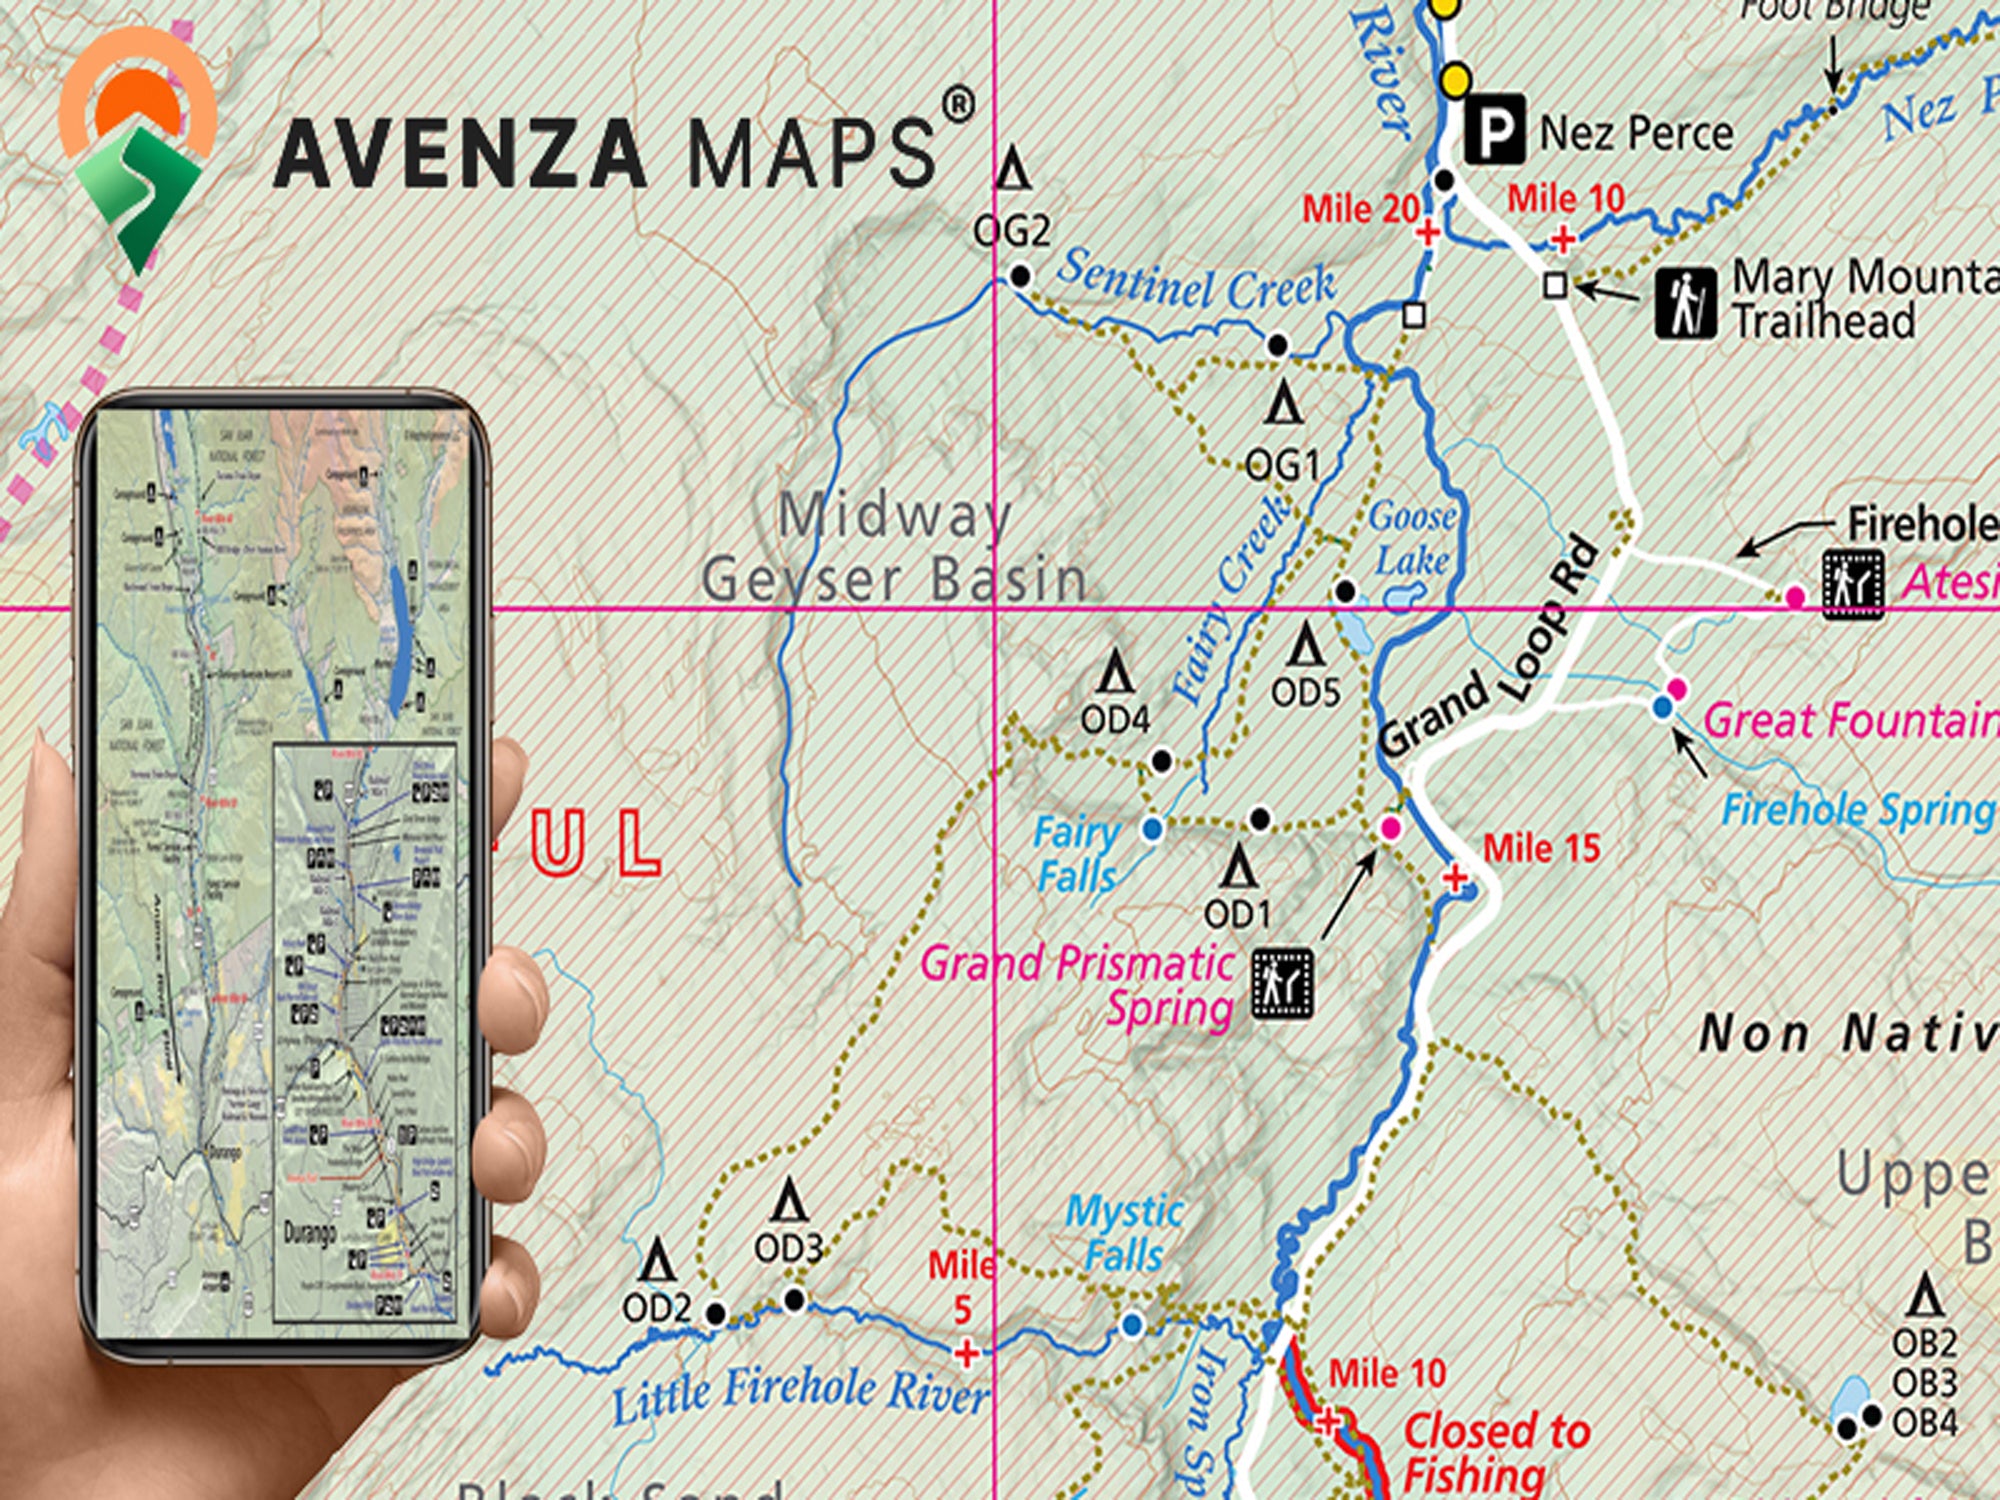 Beaverhead River, Montana Pocket Fishing Map